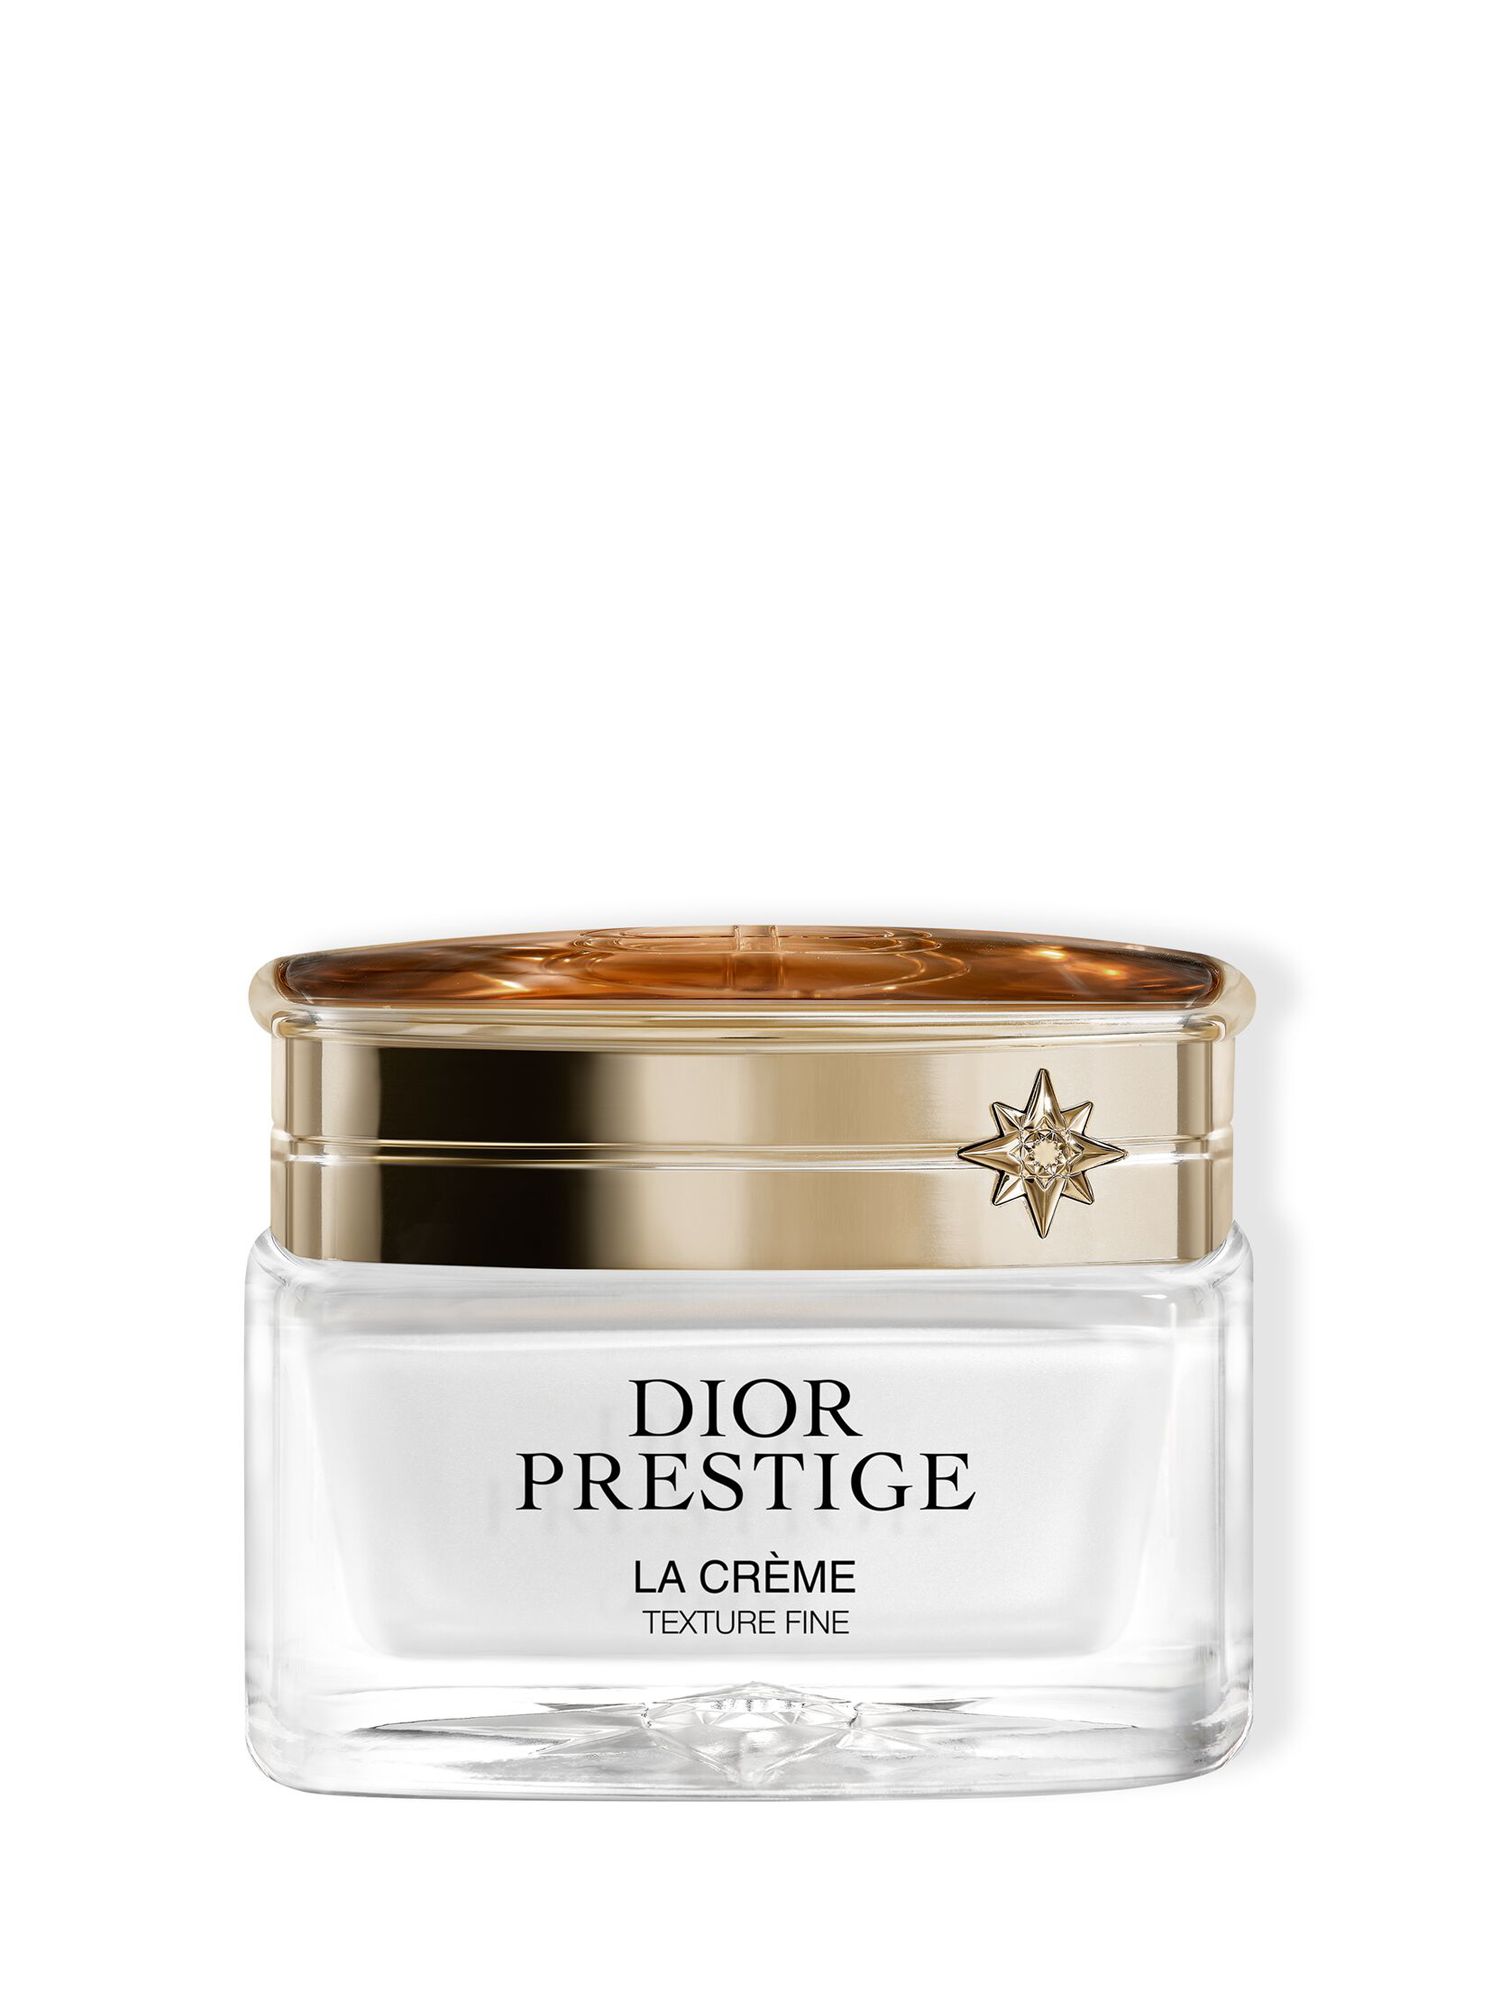 DIOR Prestige La Crème Texture Fine Jar, 50ml 1